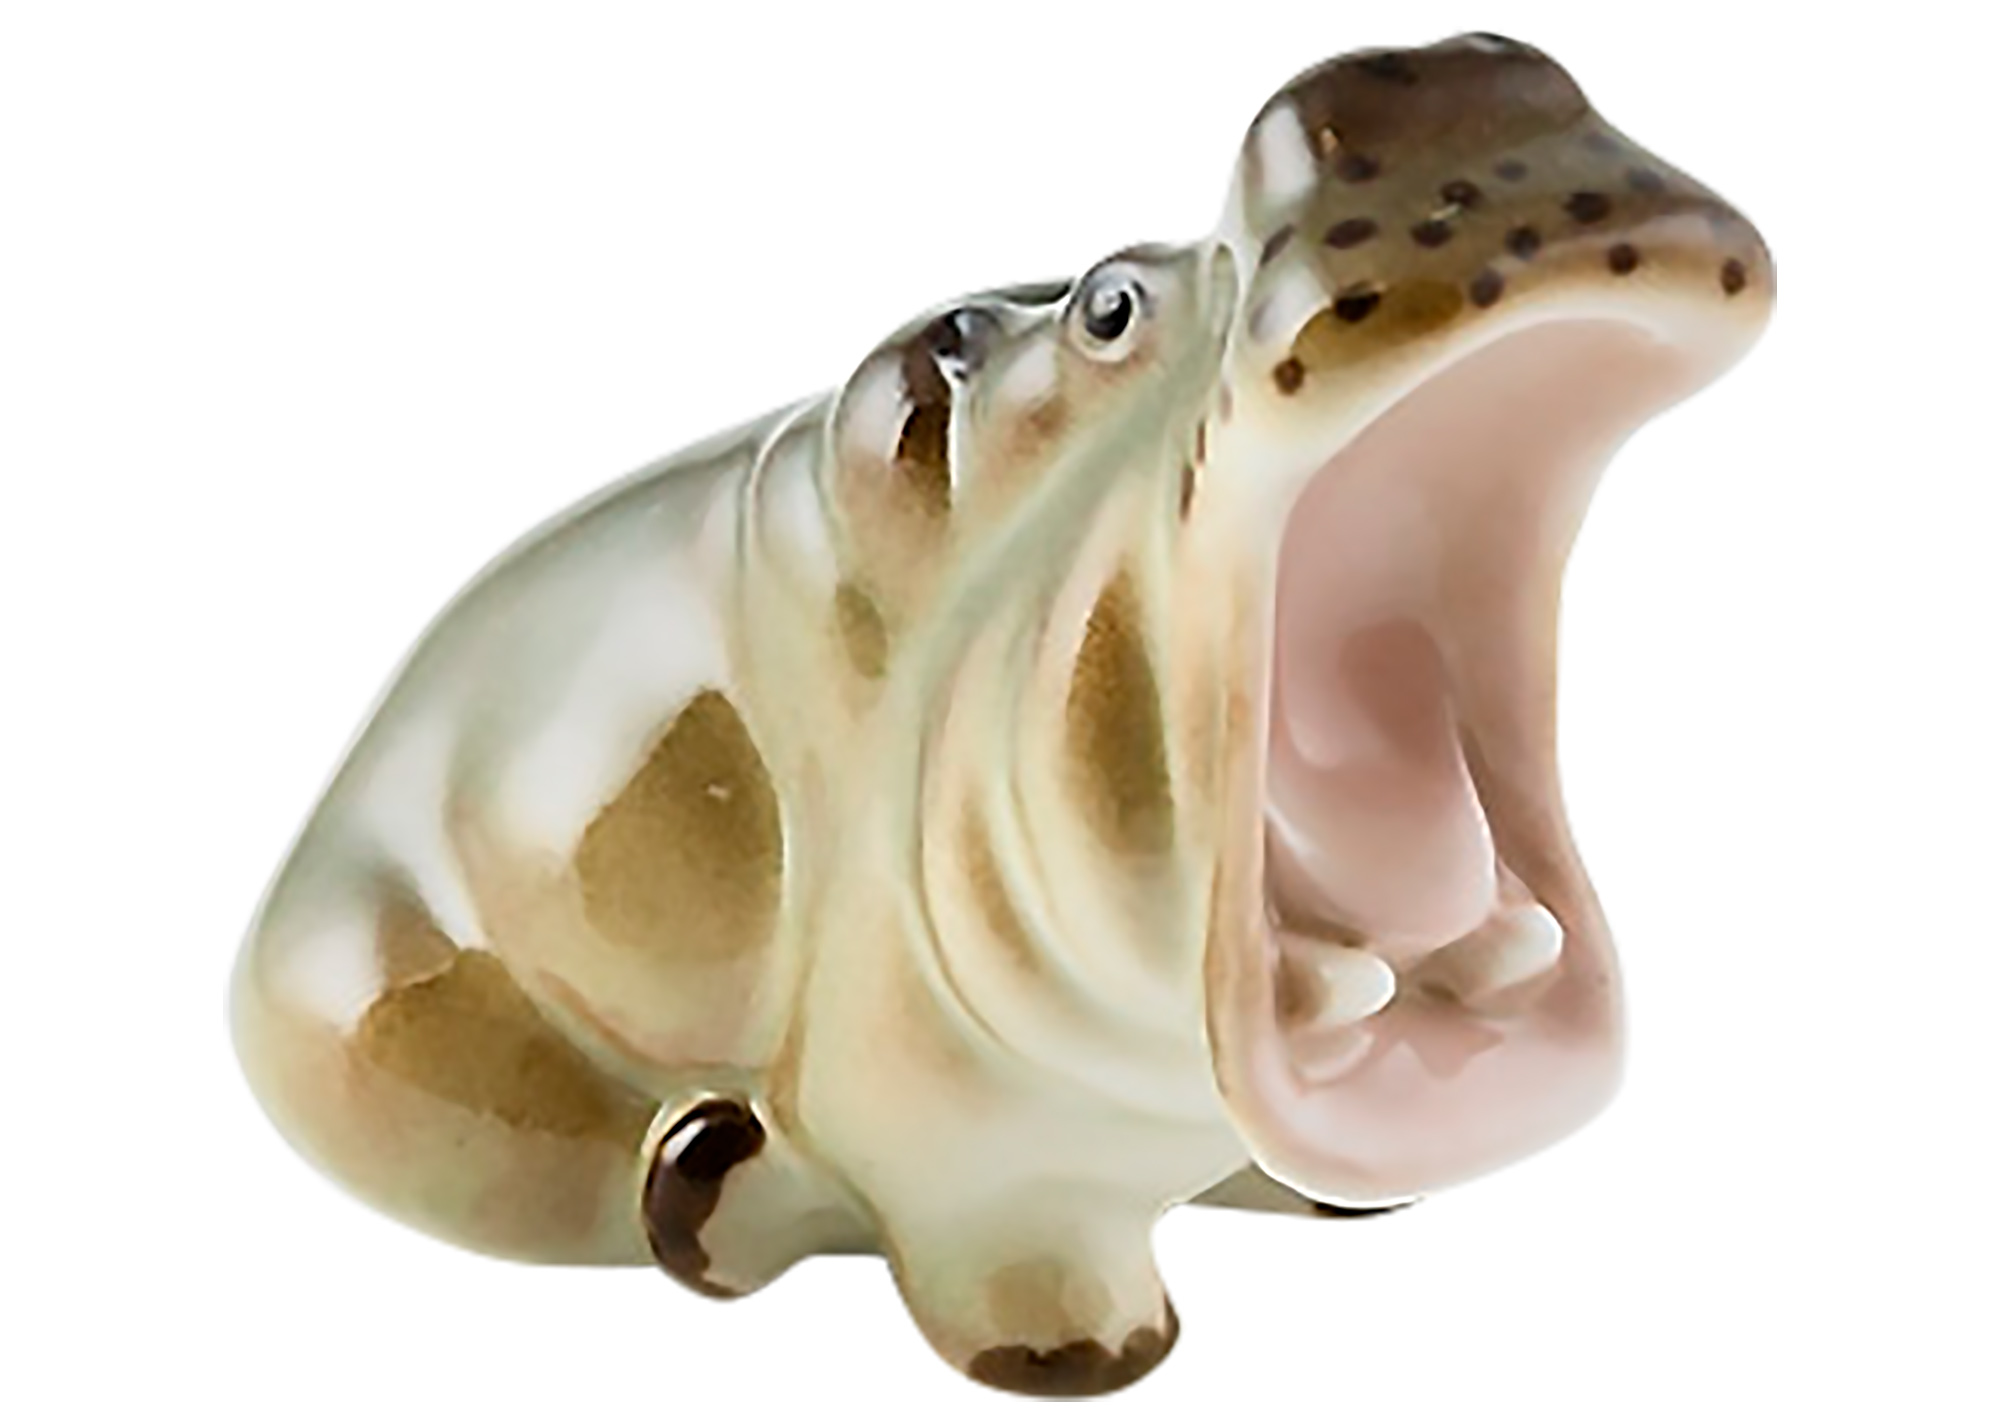 Buy Medium Hippo Figurine at GoldenCockerel.com